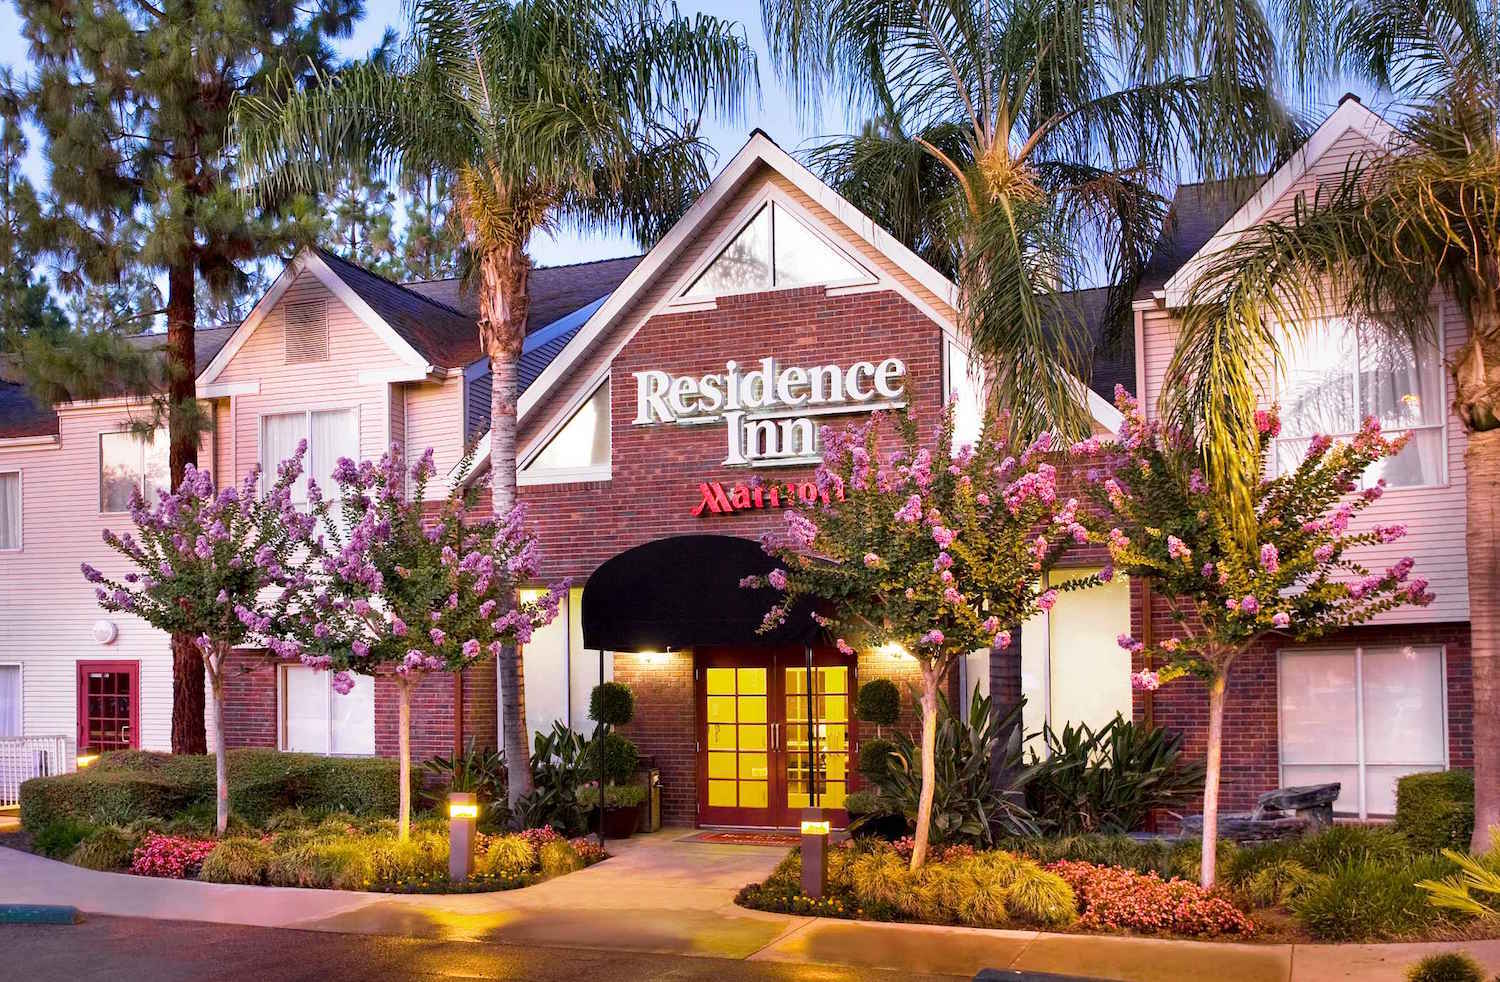 Photo of Residence Inn Bakersfield, Bakersfield, CA